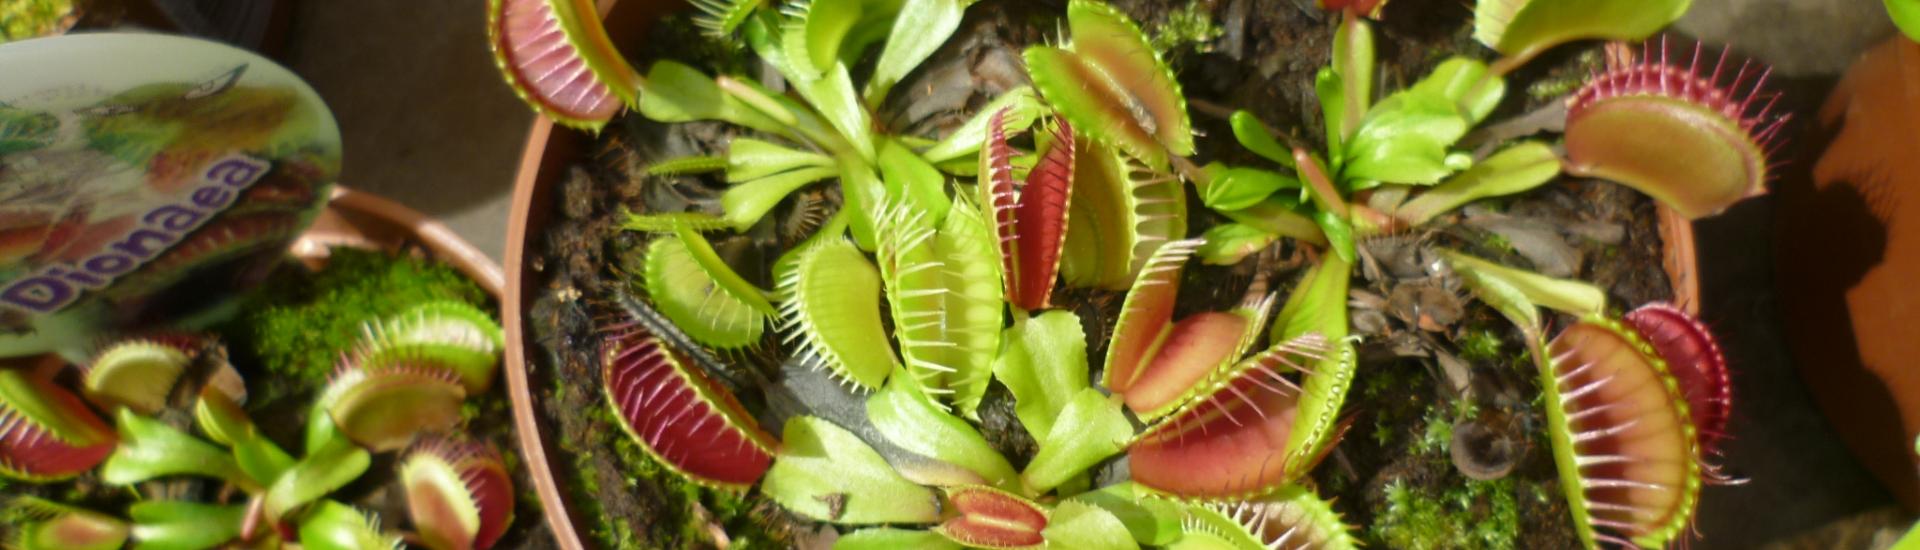 A birds eye view of pots containing Venus flytrap plants